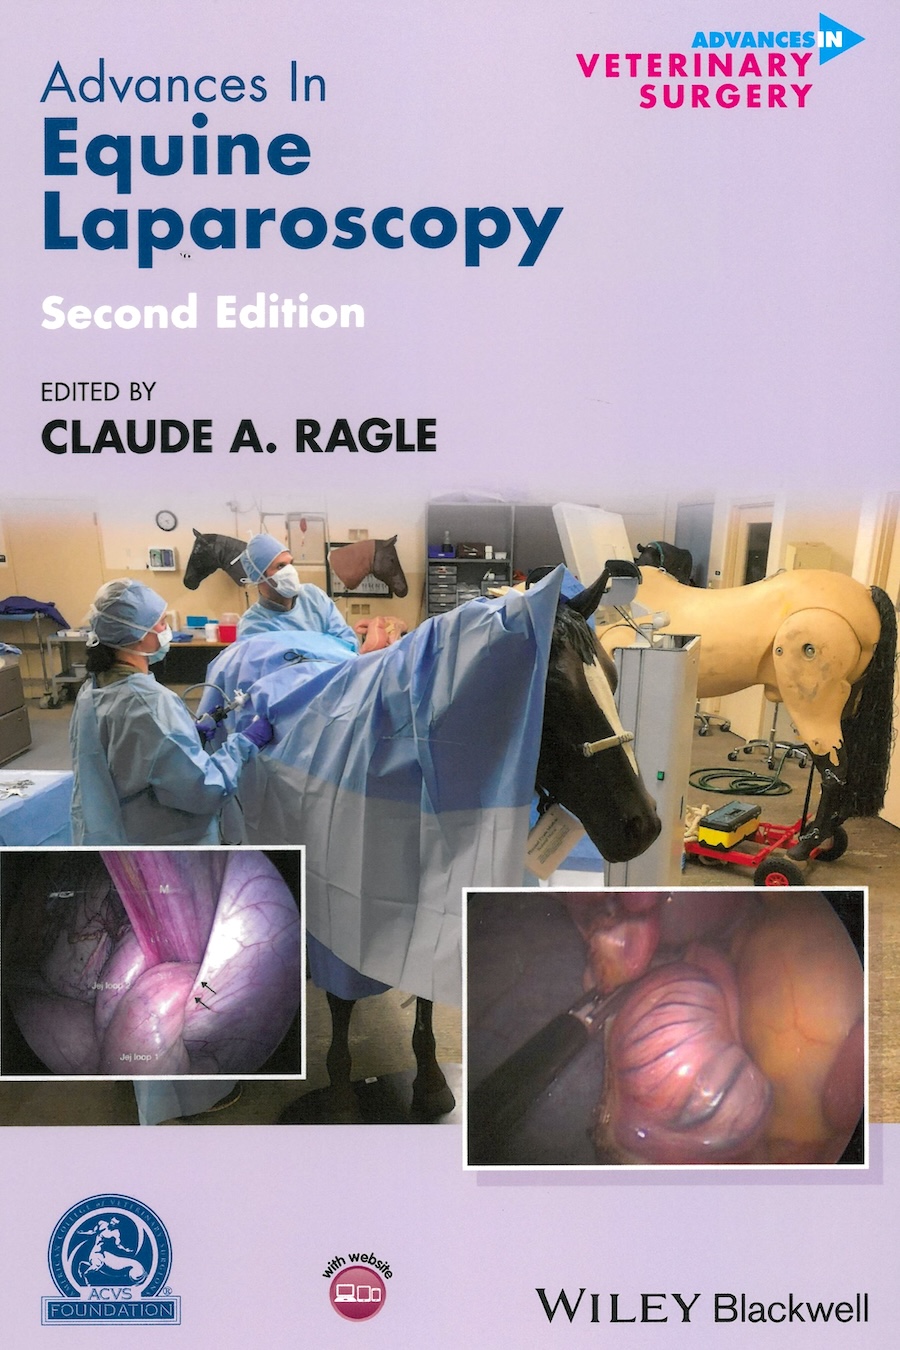 Advances in Equine Laparoscopy